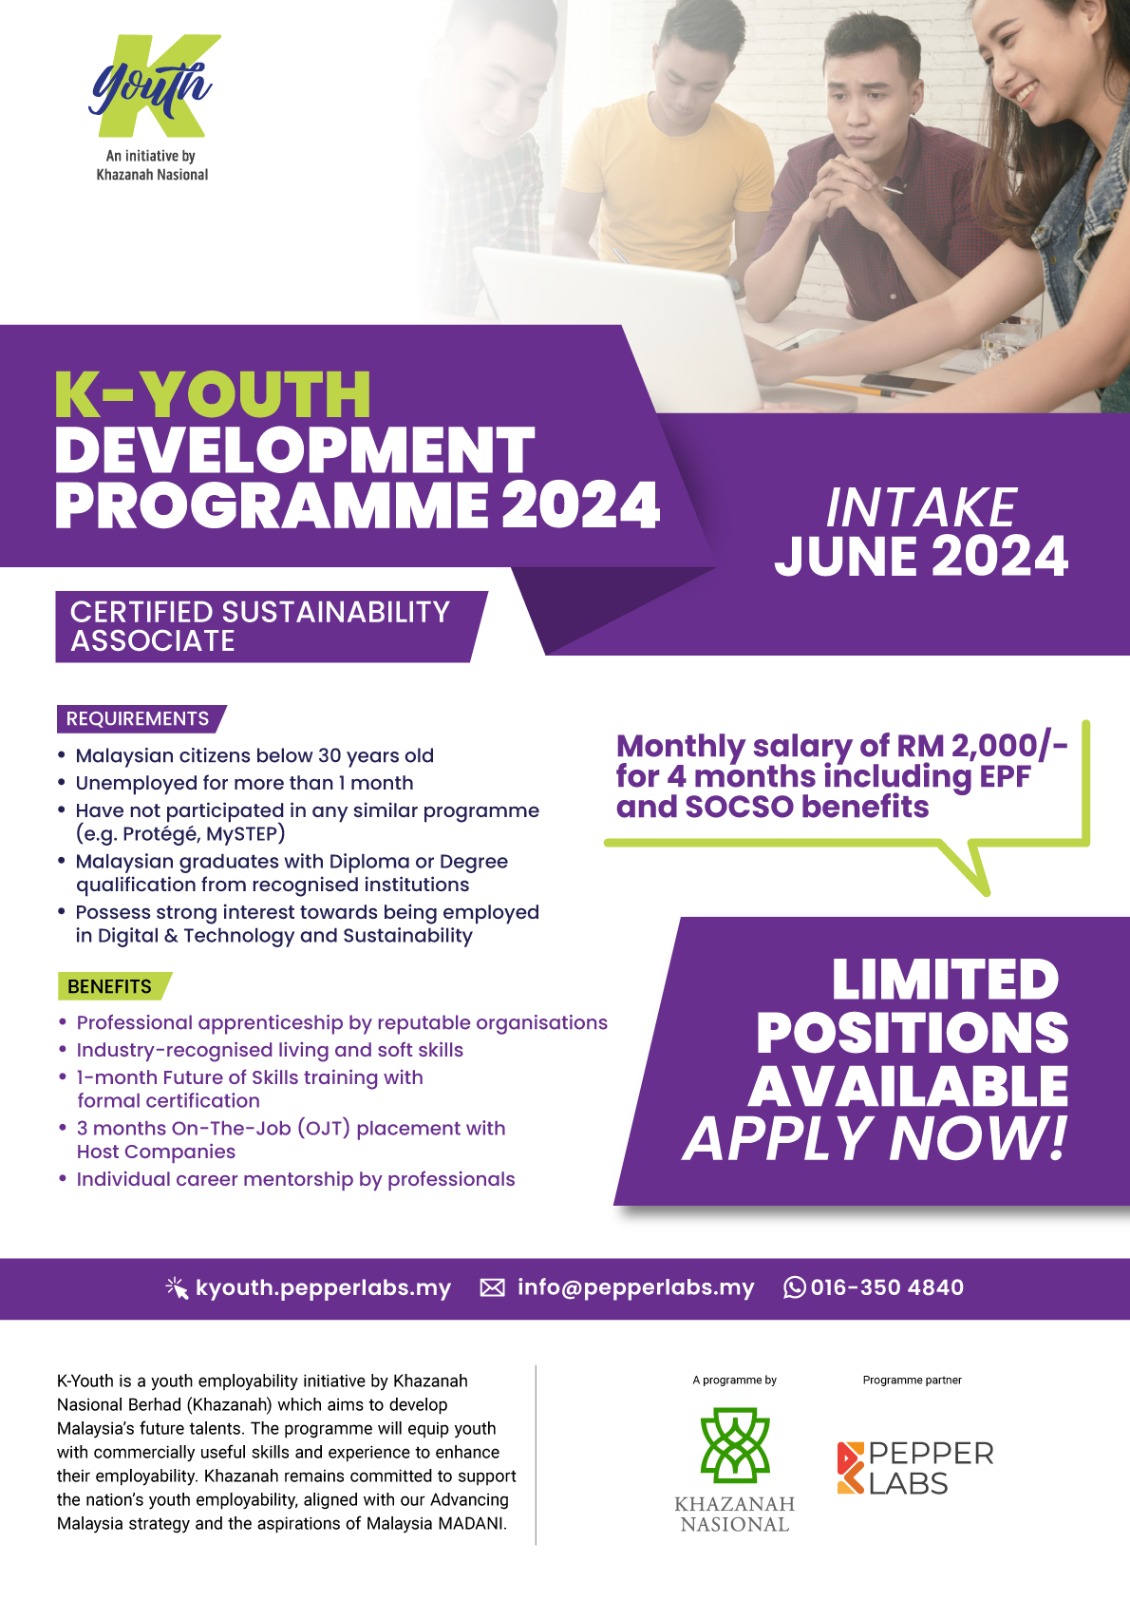 K-YOUTH DEVELOPMENT PROGRAMME 2024